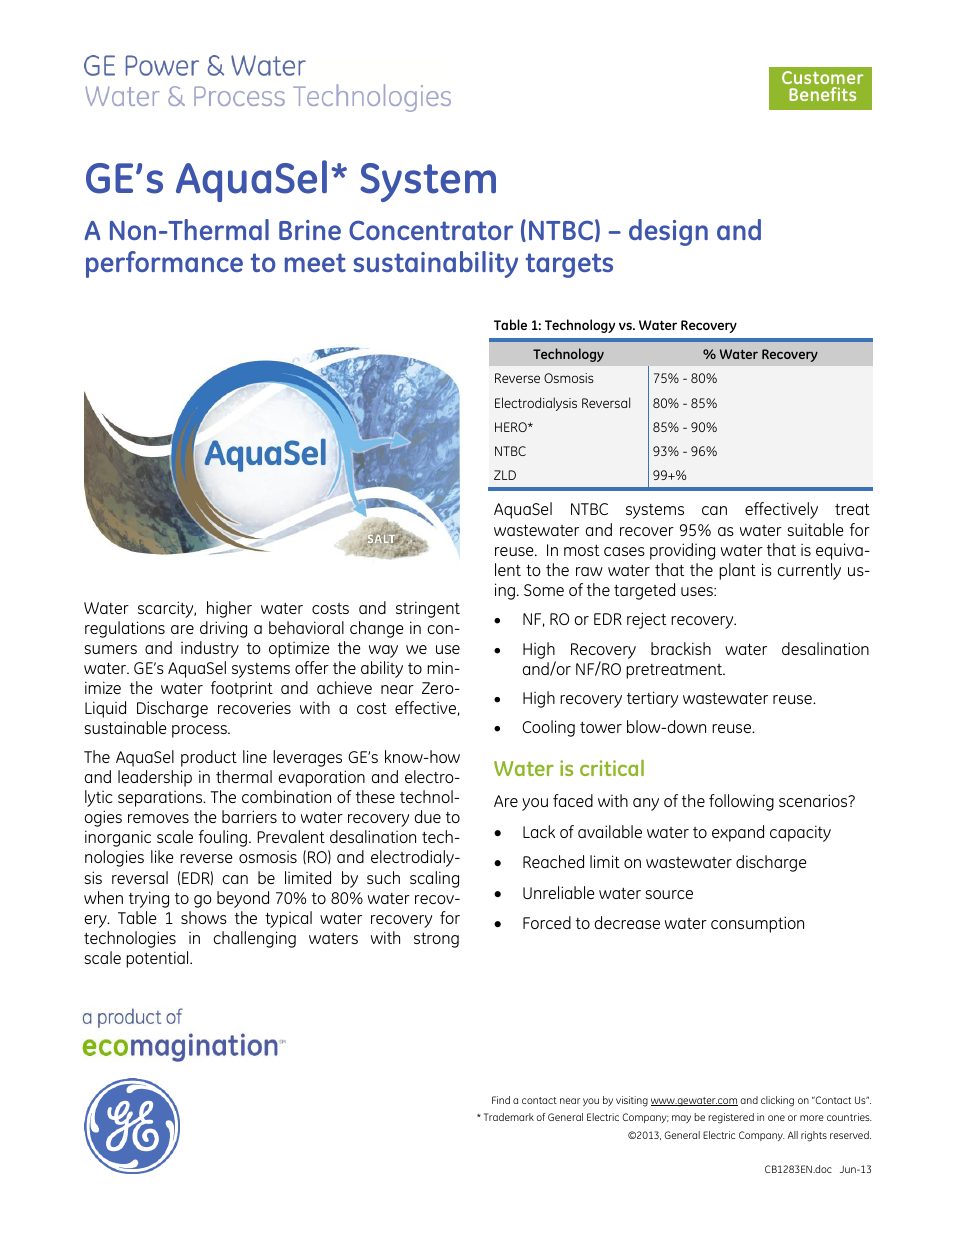 AquaSel Desalination System